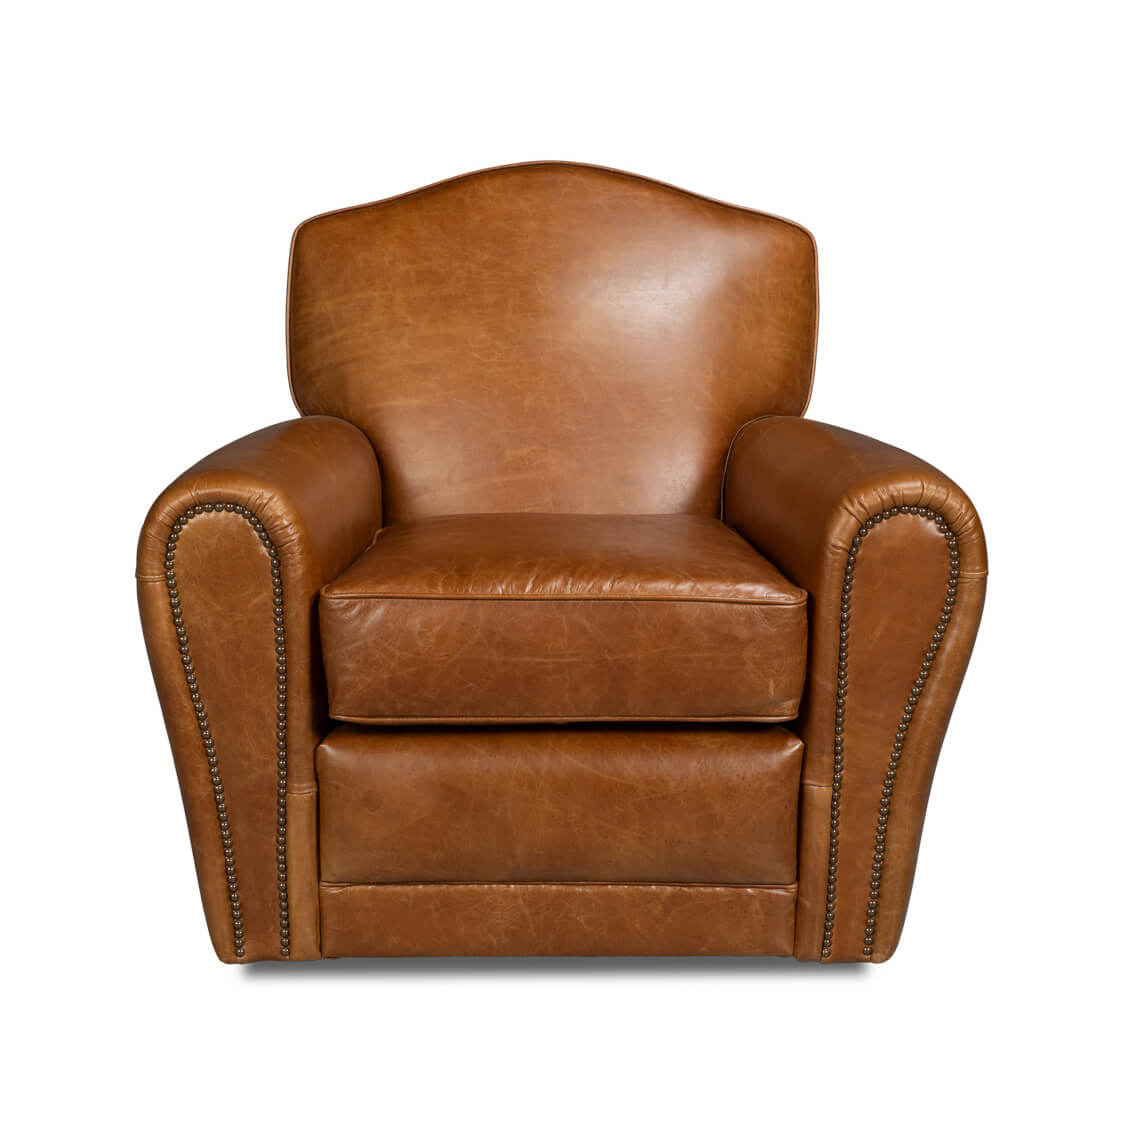 French Art Deco Style Brown Leather Club Chair - English Georgian America